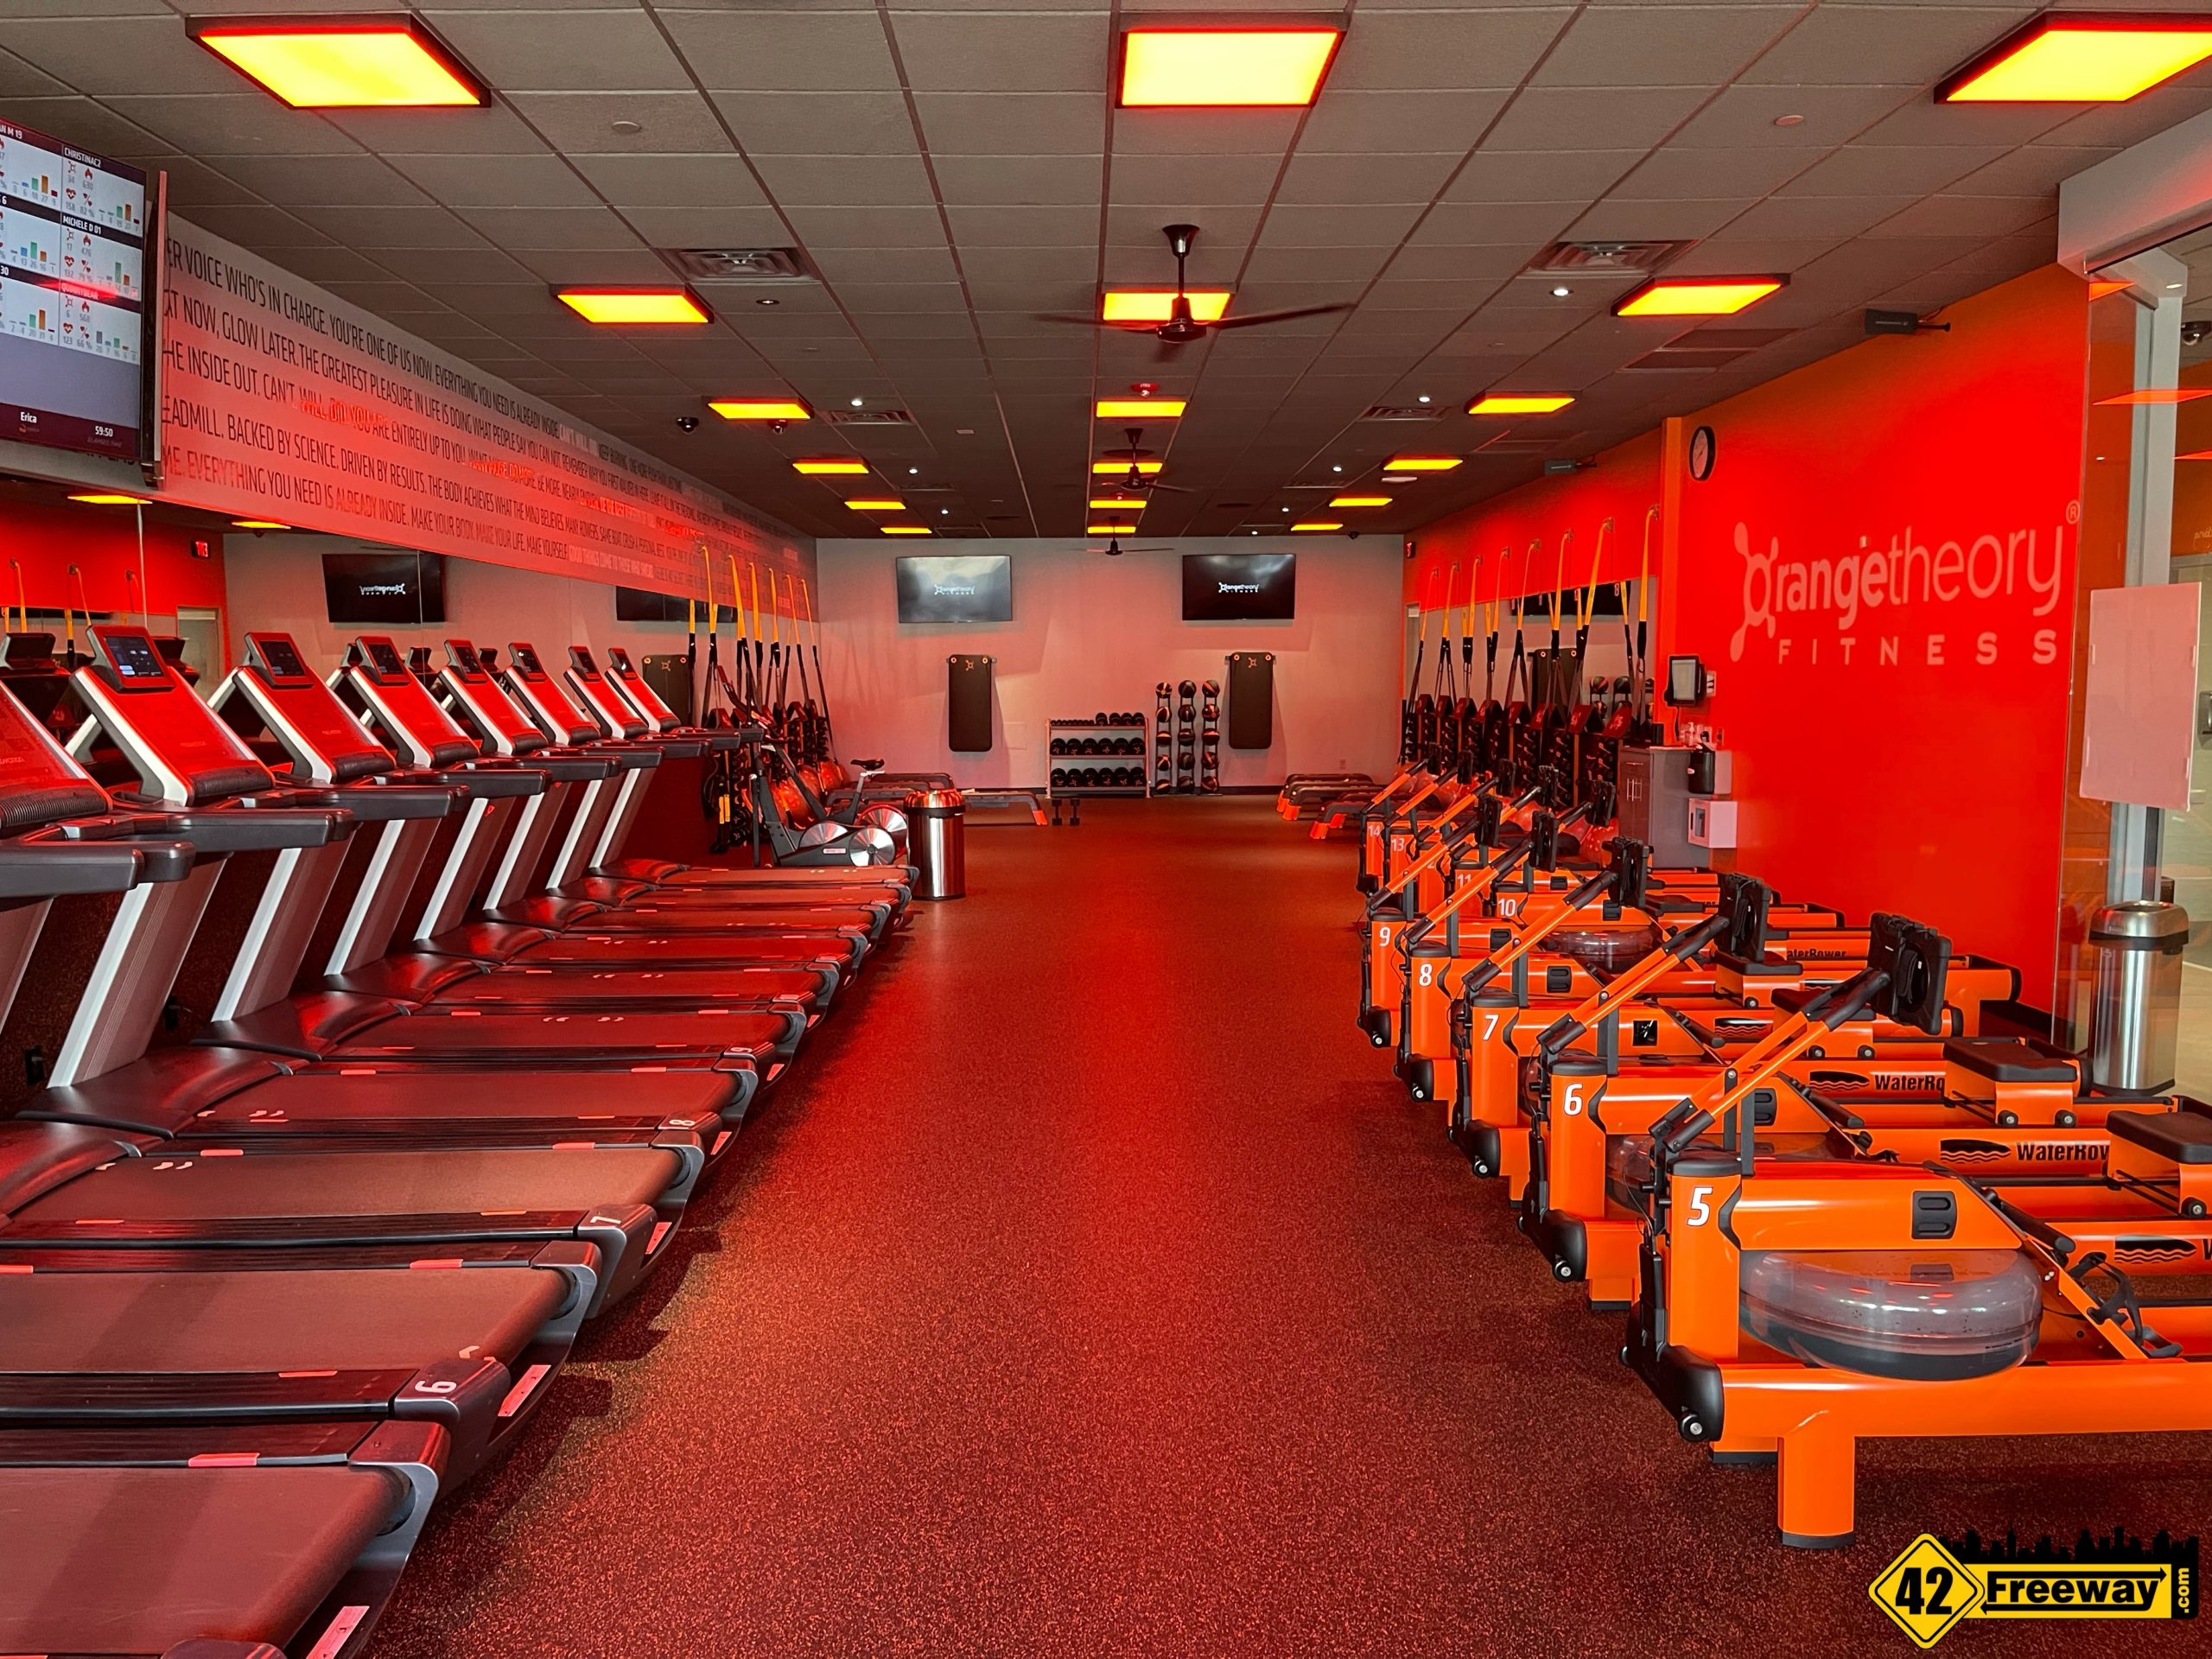 Orangetheory Fitness Studio is Open In Deptford (and Washington Township) 42 Freeway